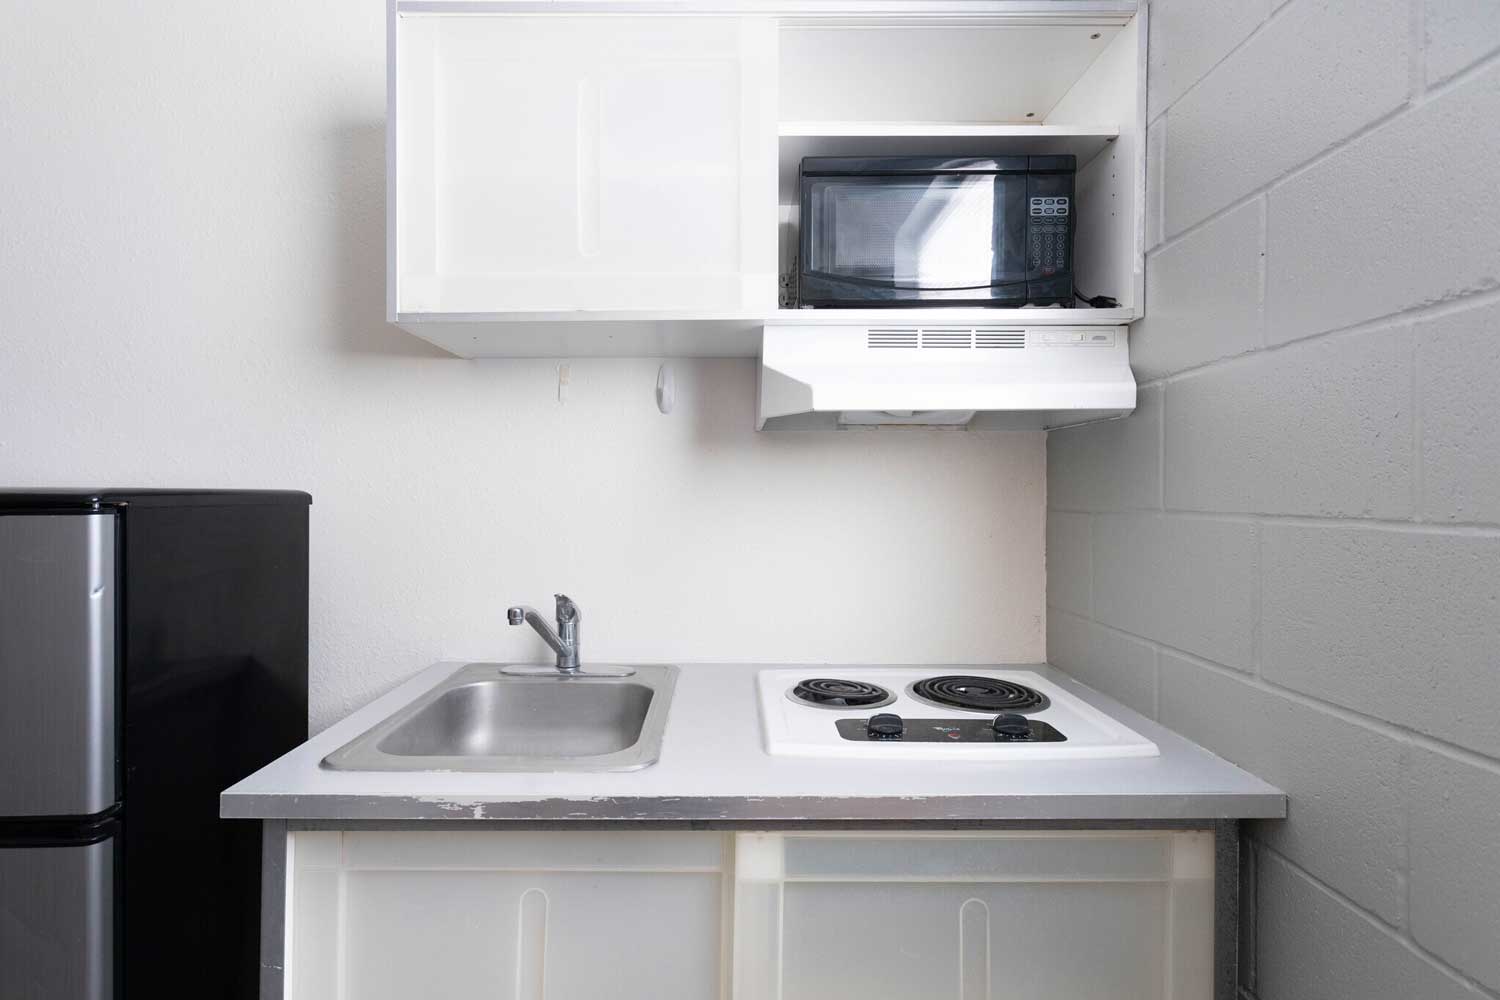 Kitchen Appliances at Pelican Shores Apartments in Galveston, Texas